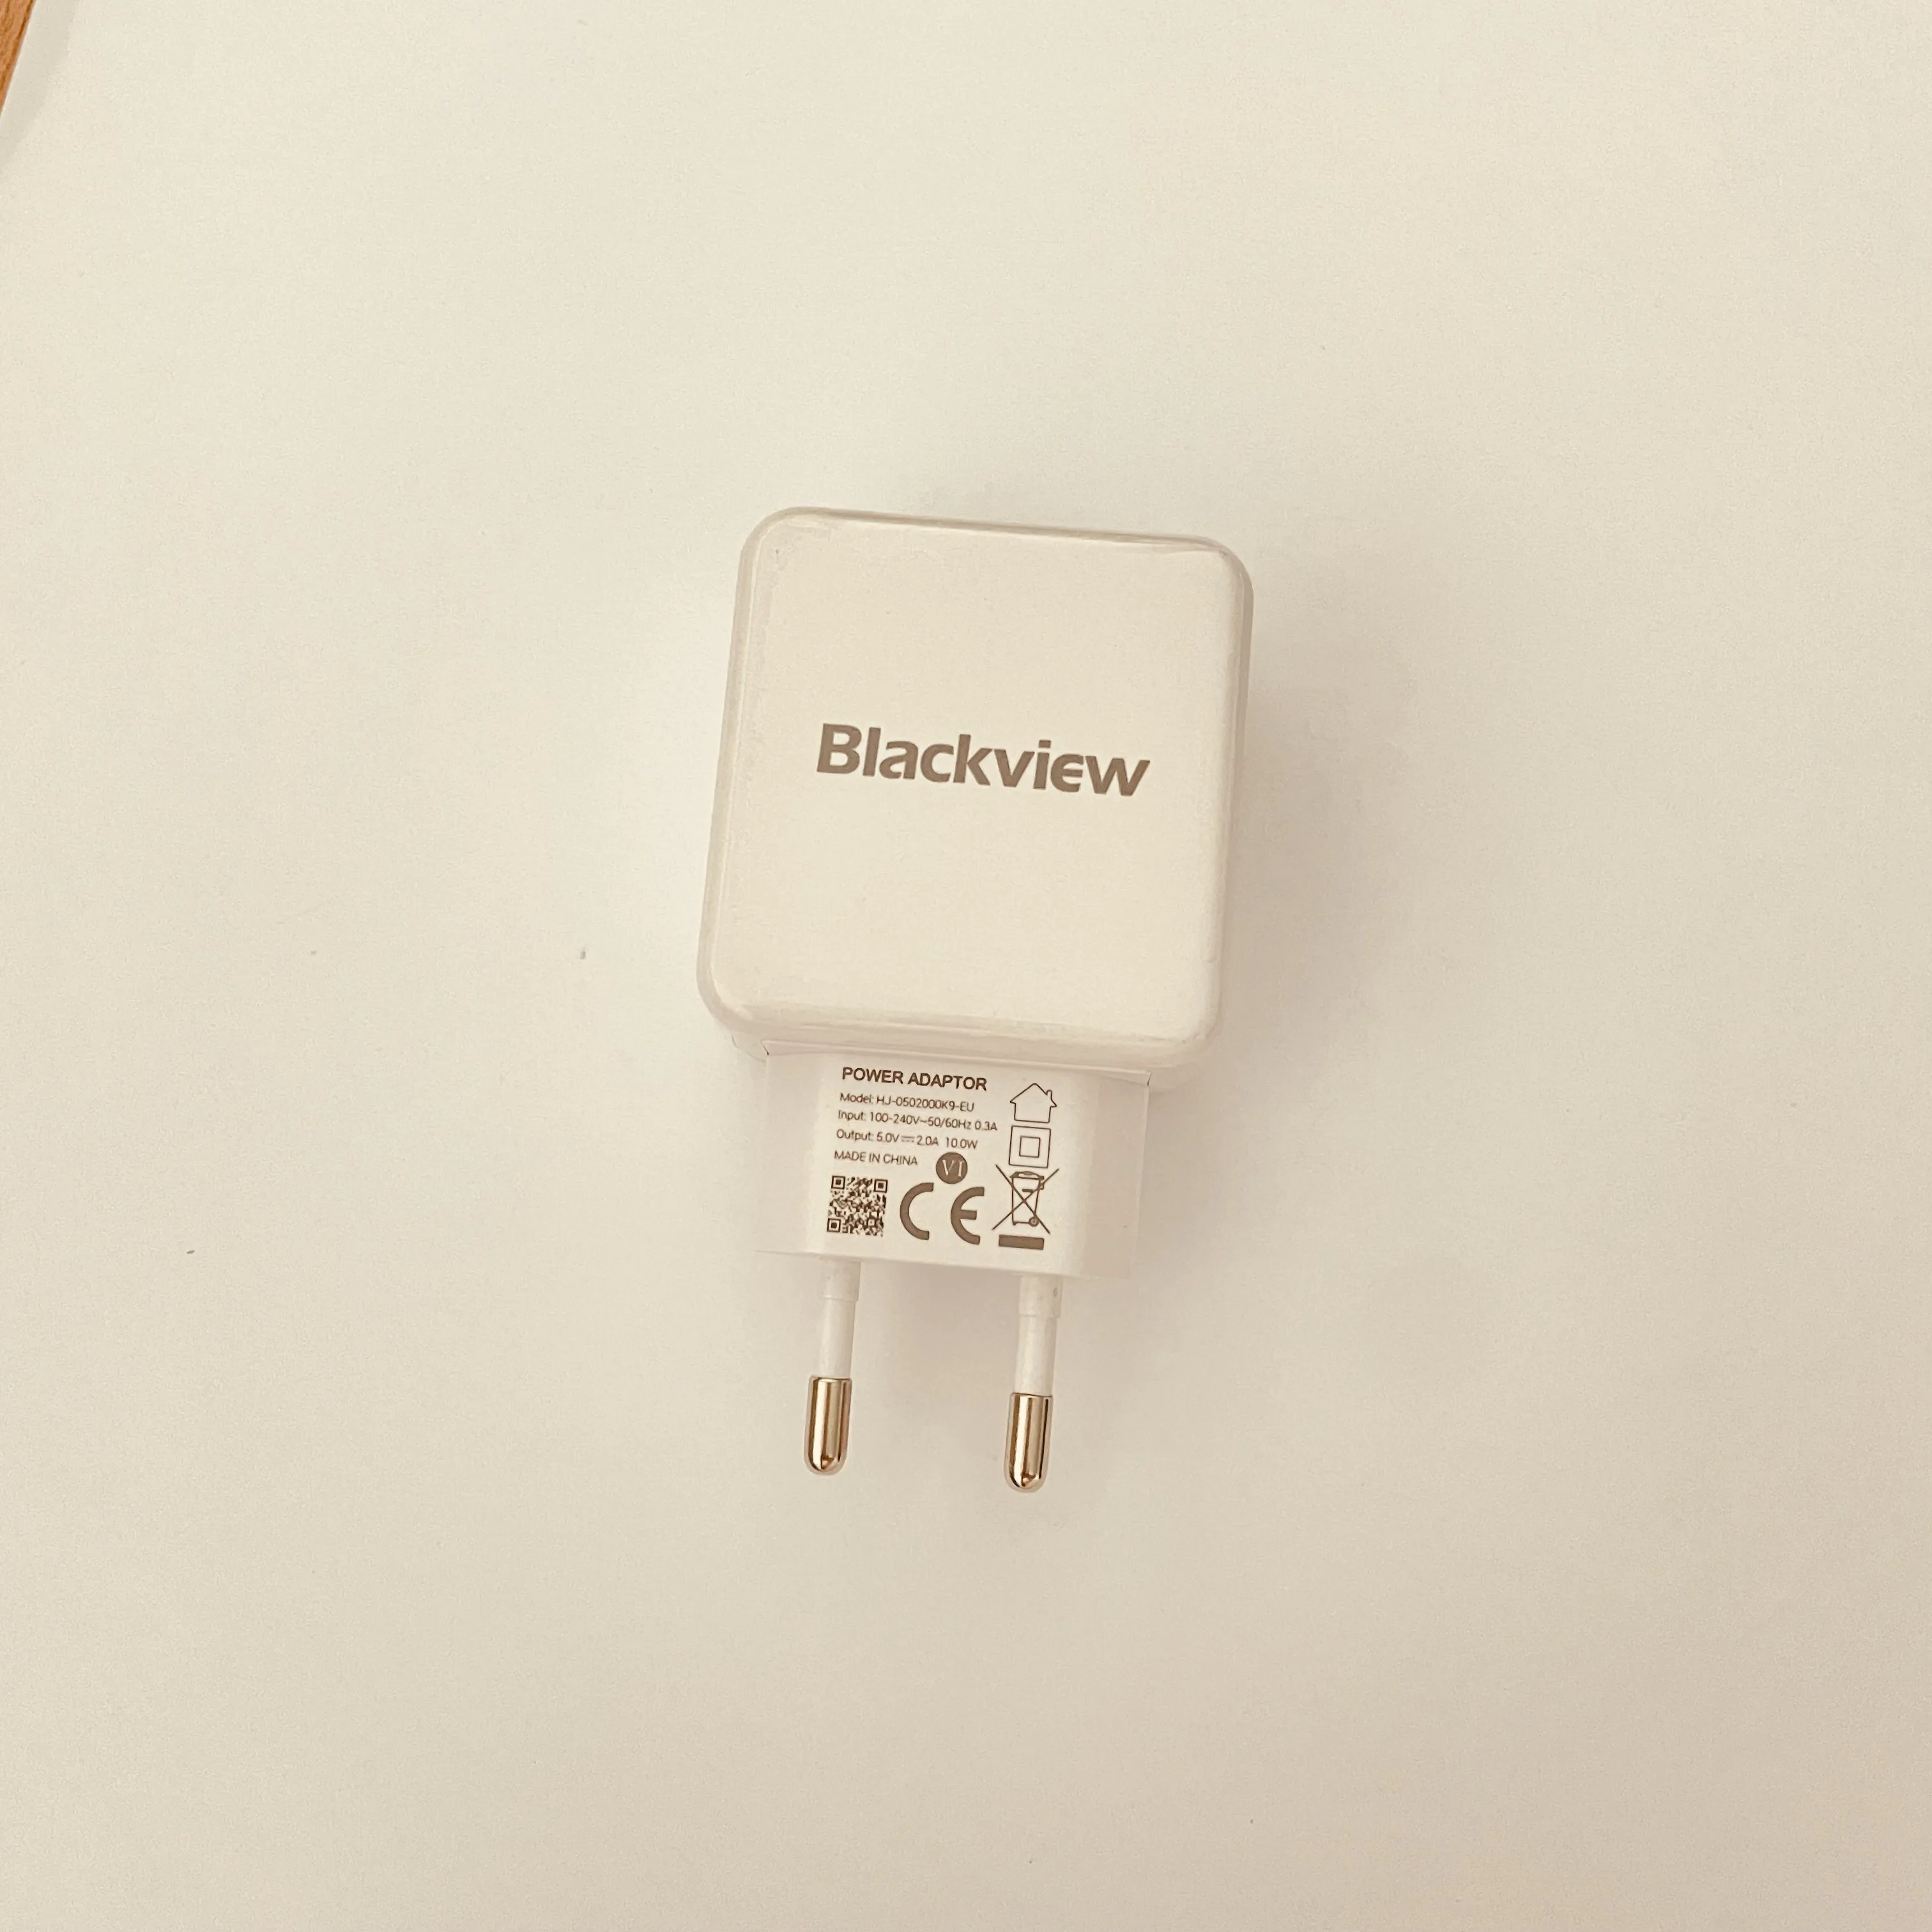 Blackview-cargador de viaje A80 Original, Cable tipo C para teléfono inteligente Blackview A80 Pro, envío gratis, nuevo